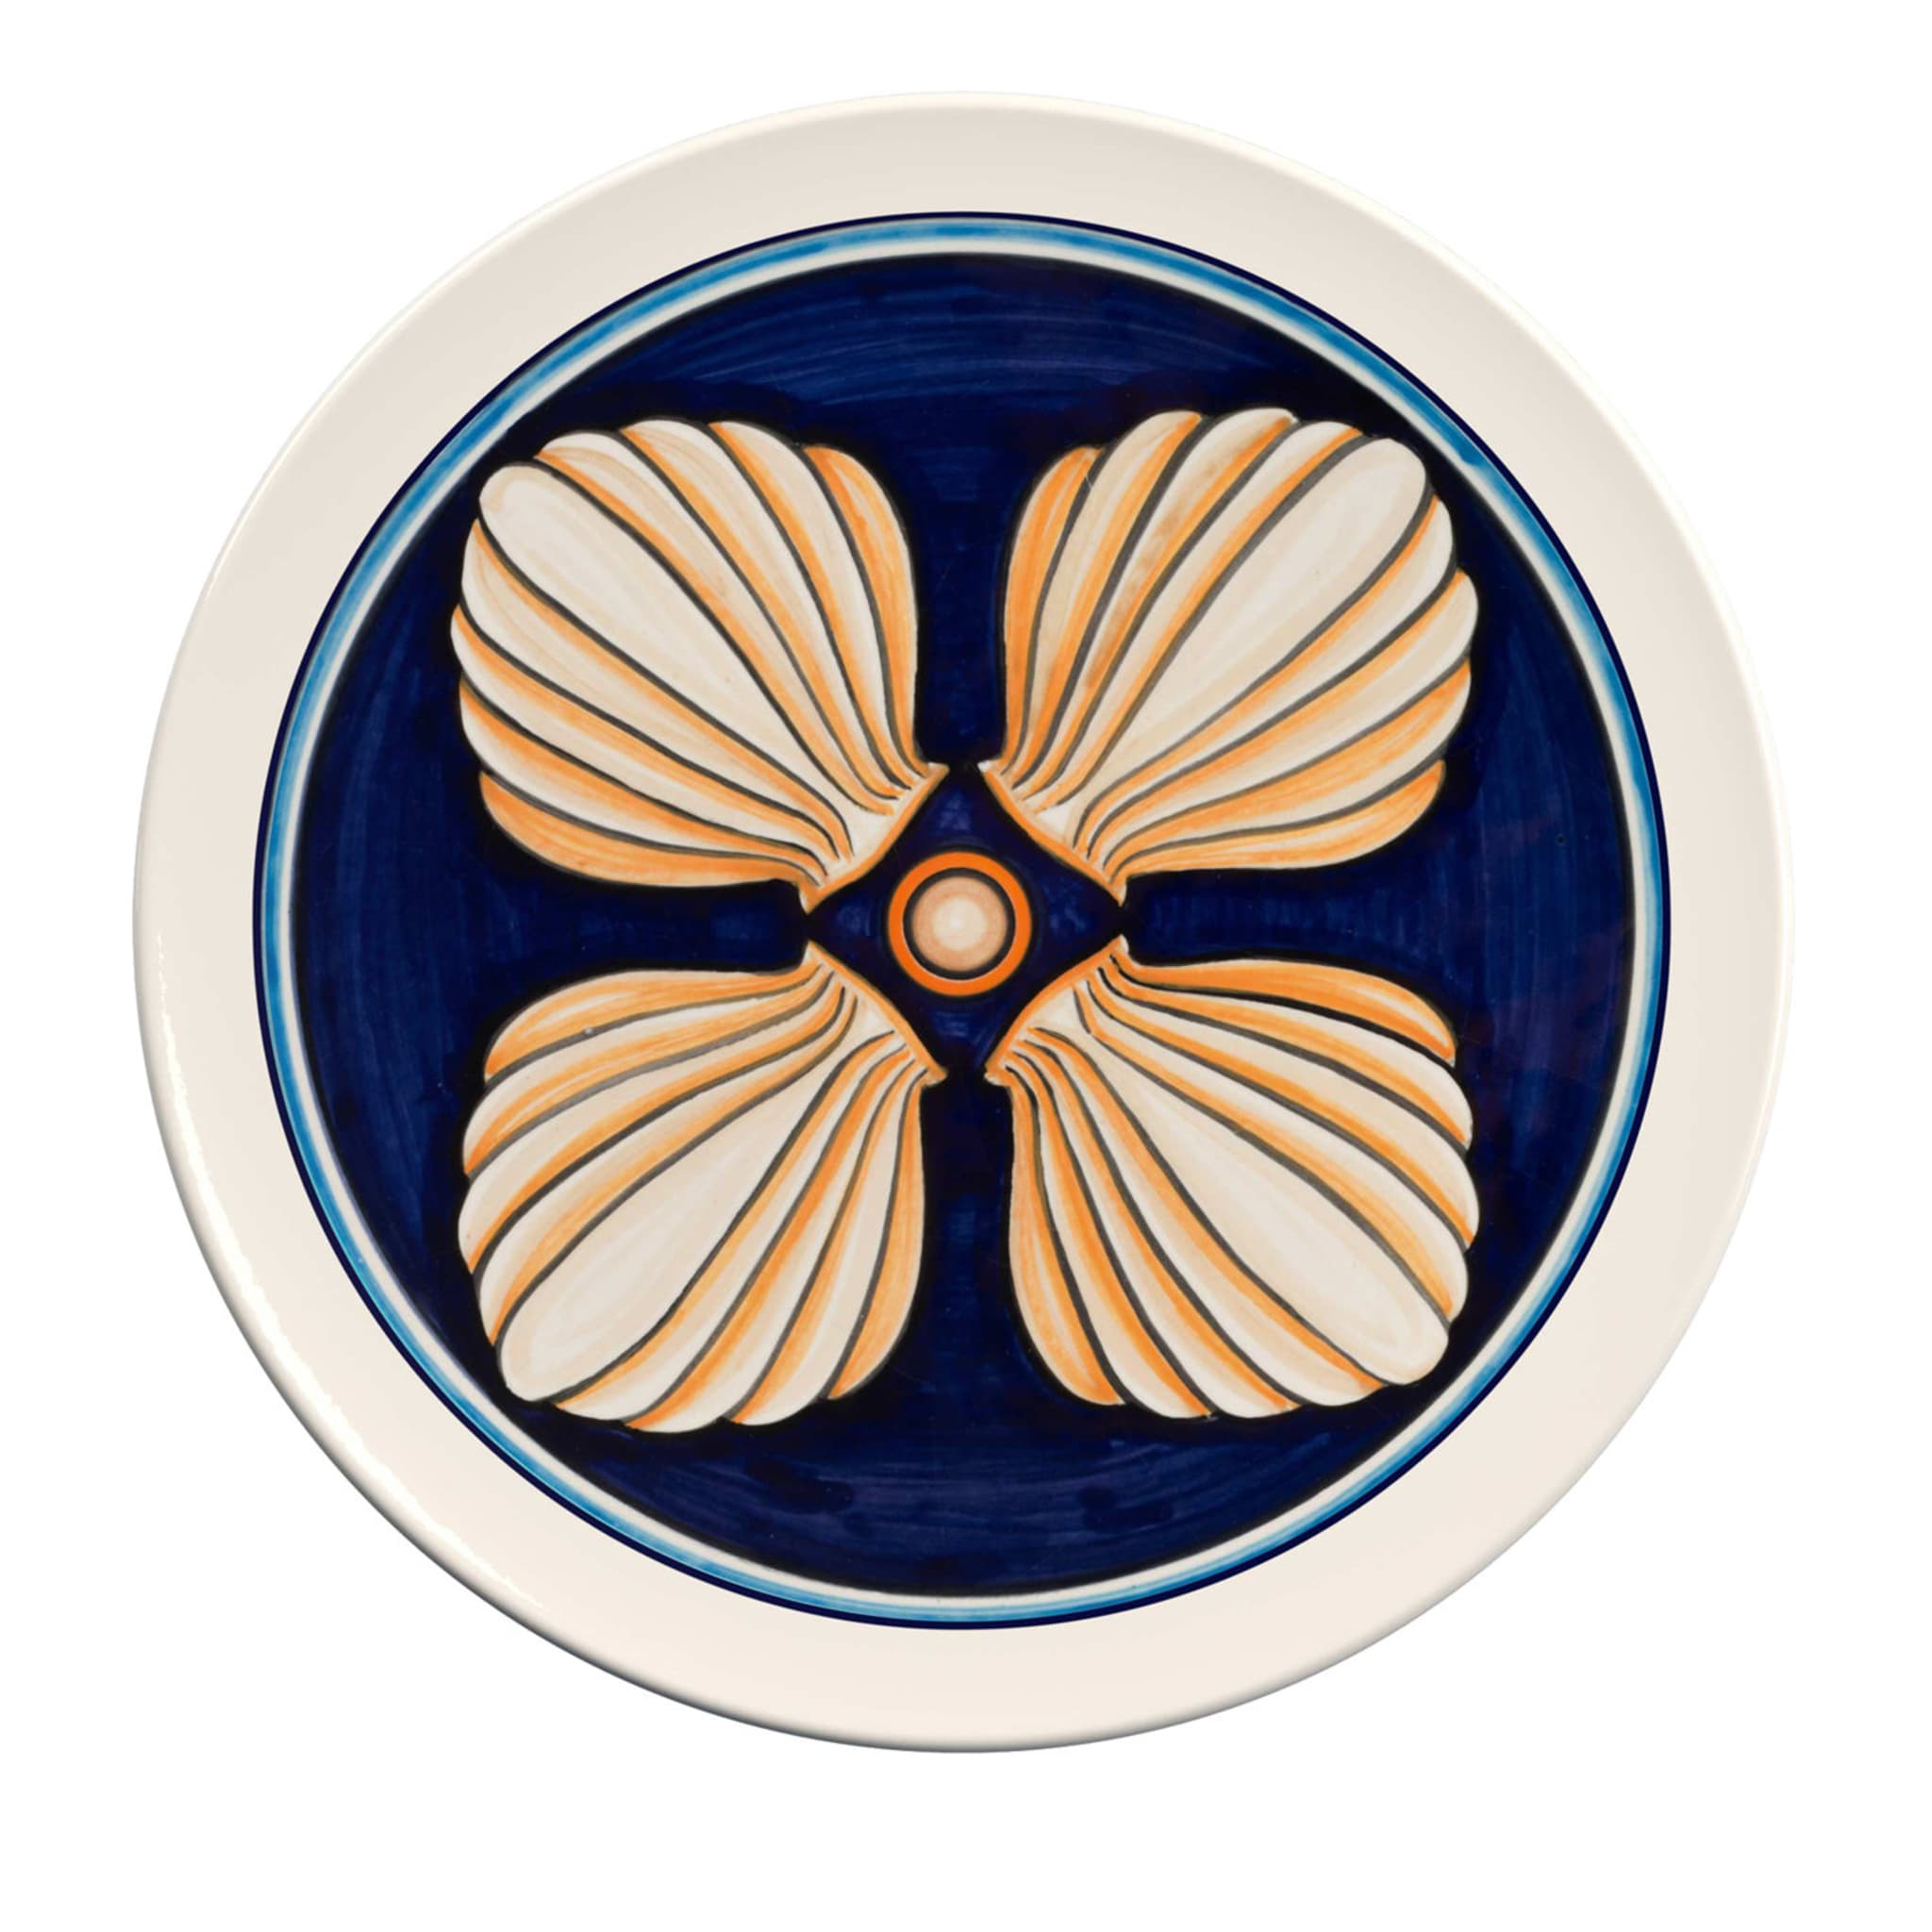 Colapesce Conchiglie Decorative Plate #1 - Main view